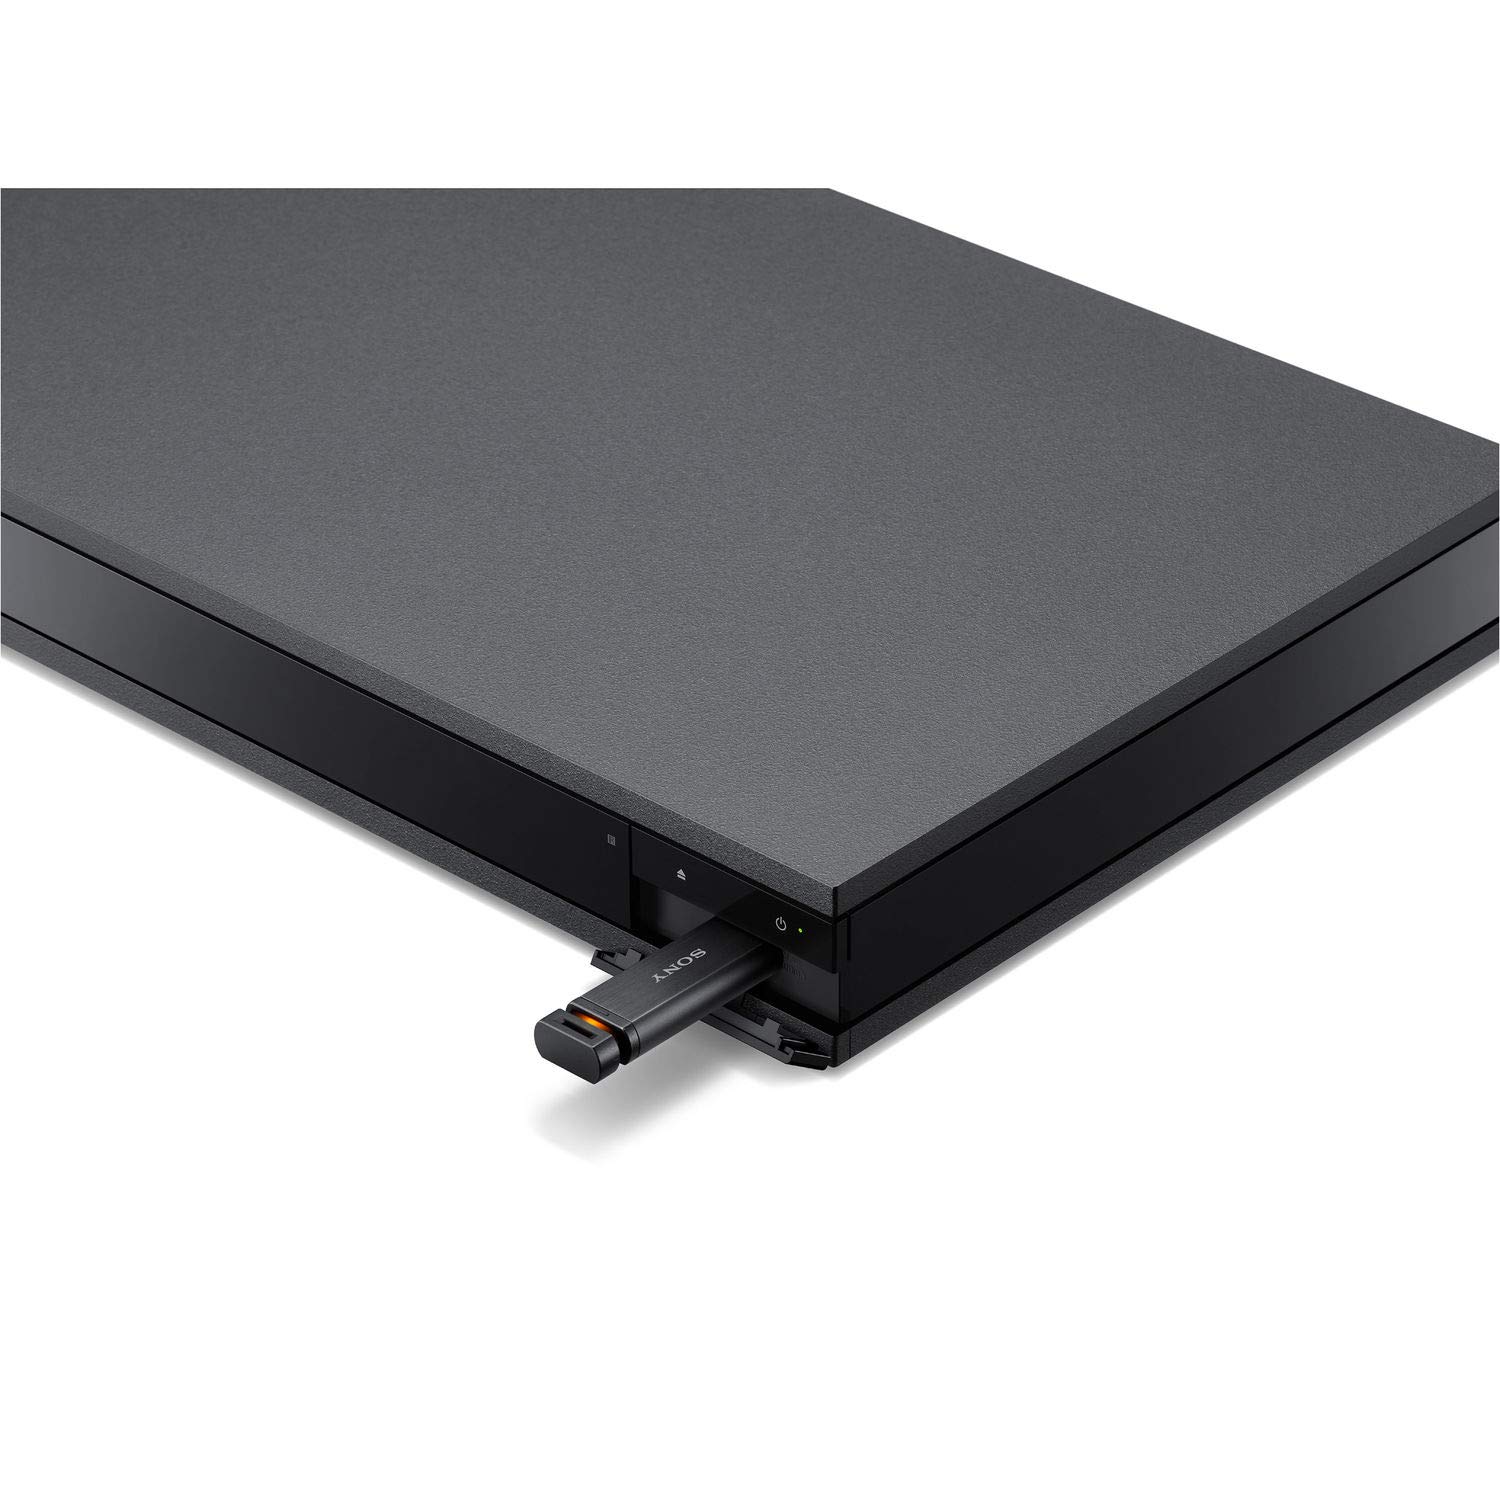 Sony X800M2 Region Zone Code Free 4K UHD Blu Ray Player - Worldwide Use - 4K UHD - WiFi - PAL/NTSC